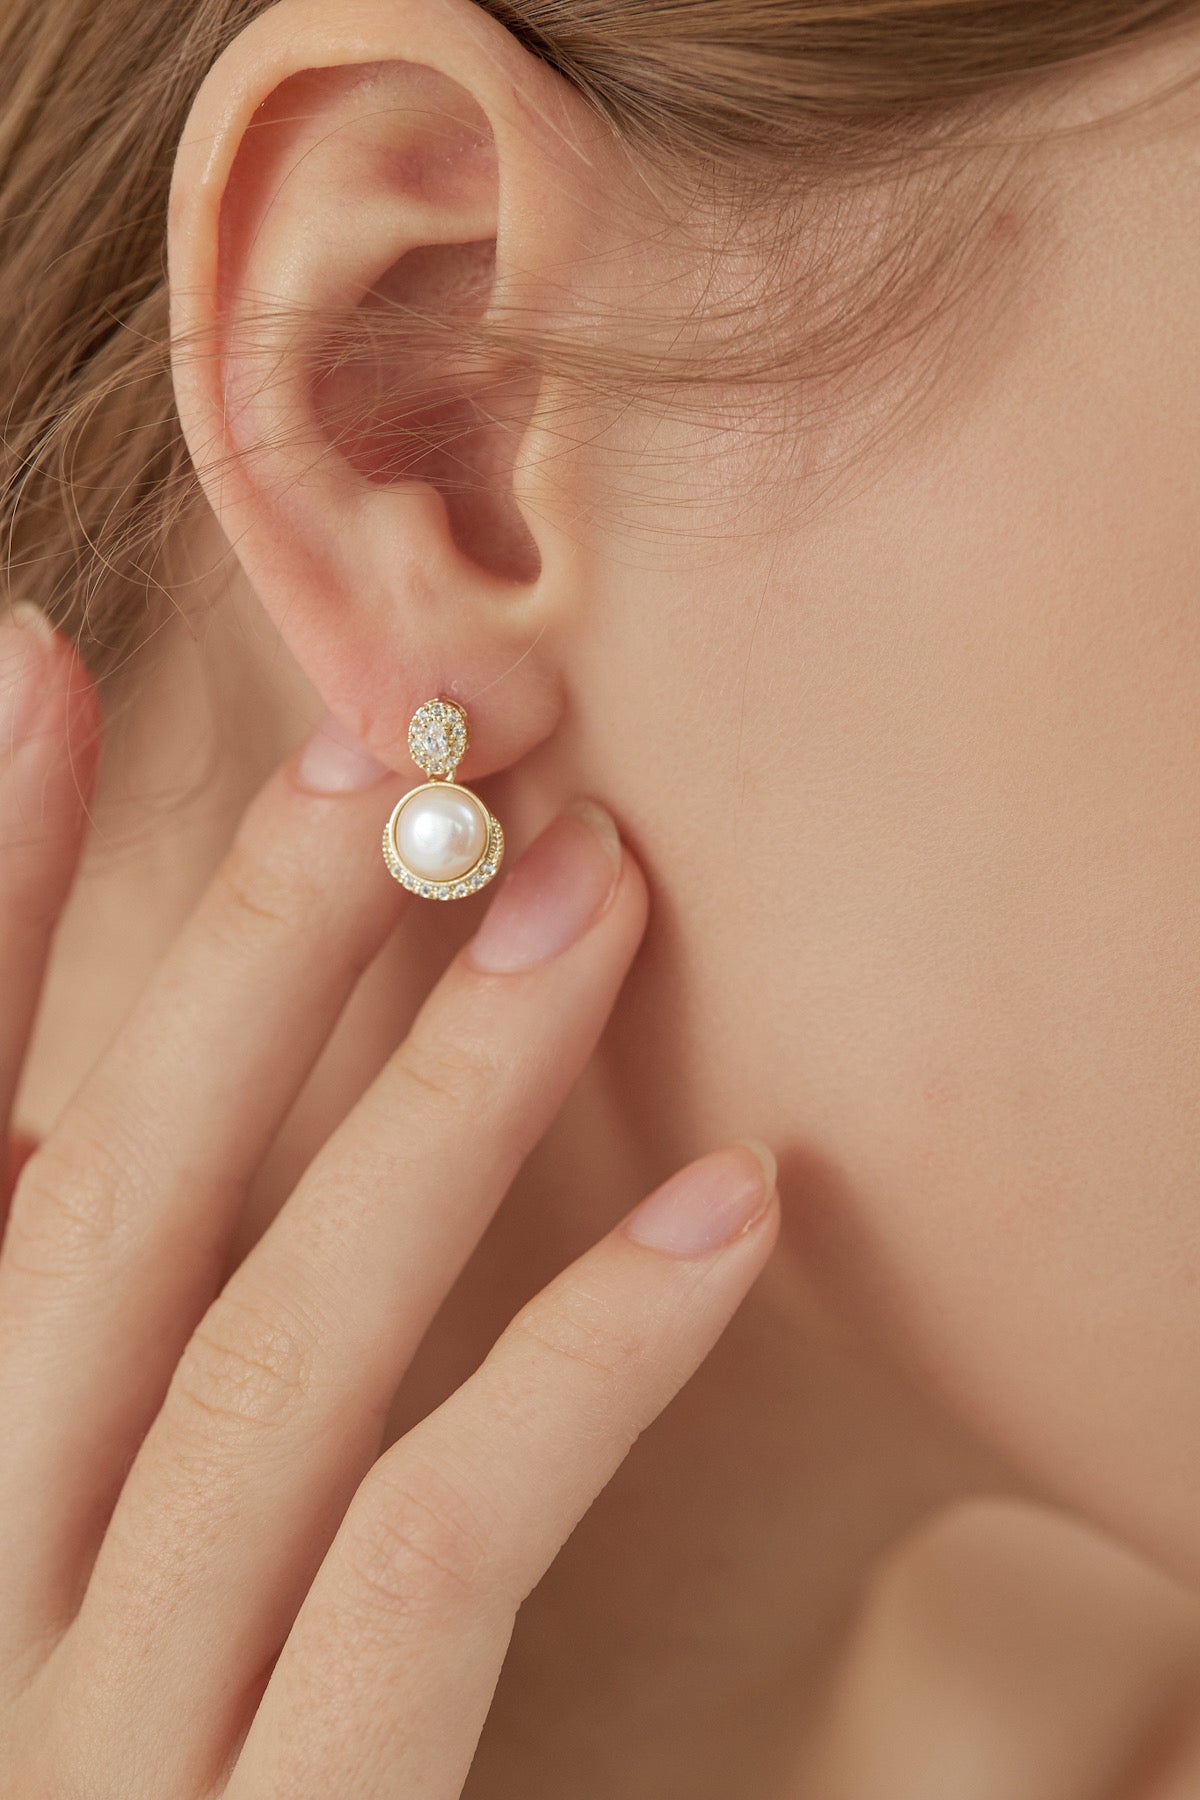 SKYE Shop Chic Modern Elegant Classy Women Jewelry French Parisian Minimalist Ayda Freshwater Pearl Drop Earrings 6